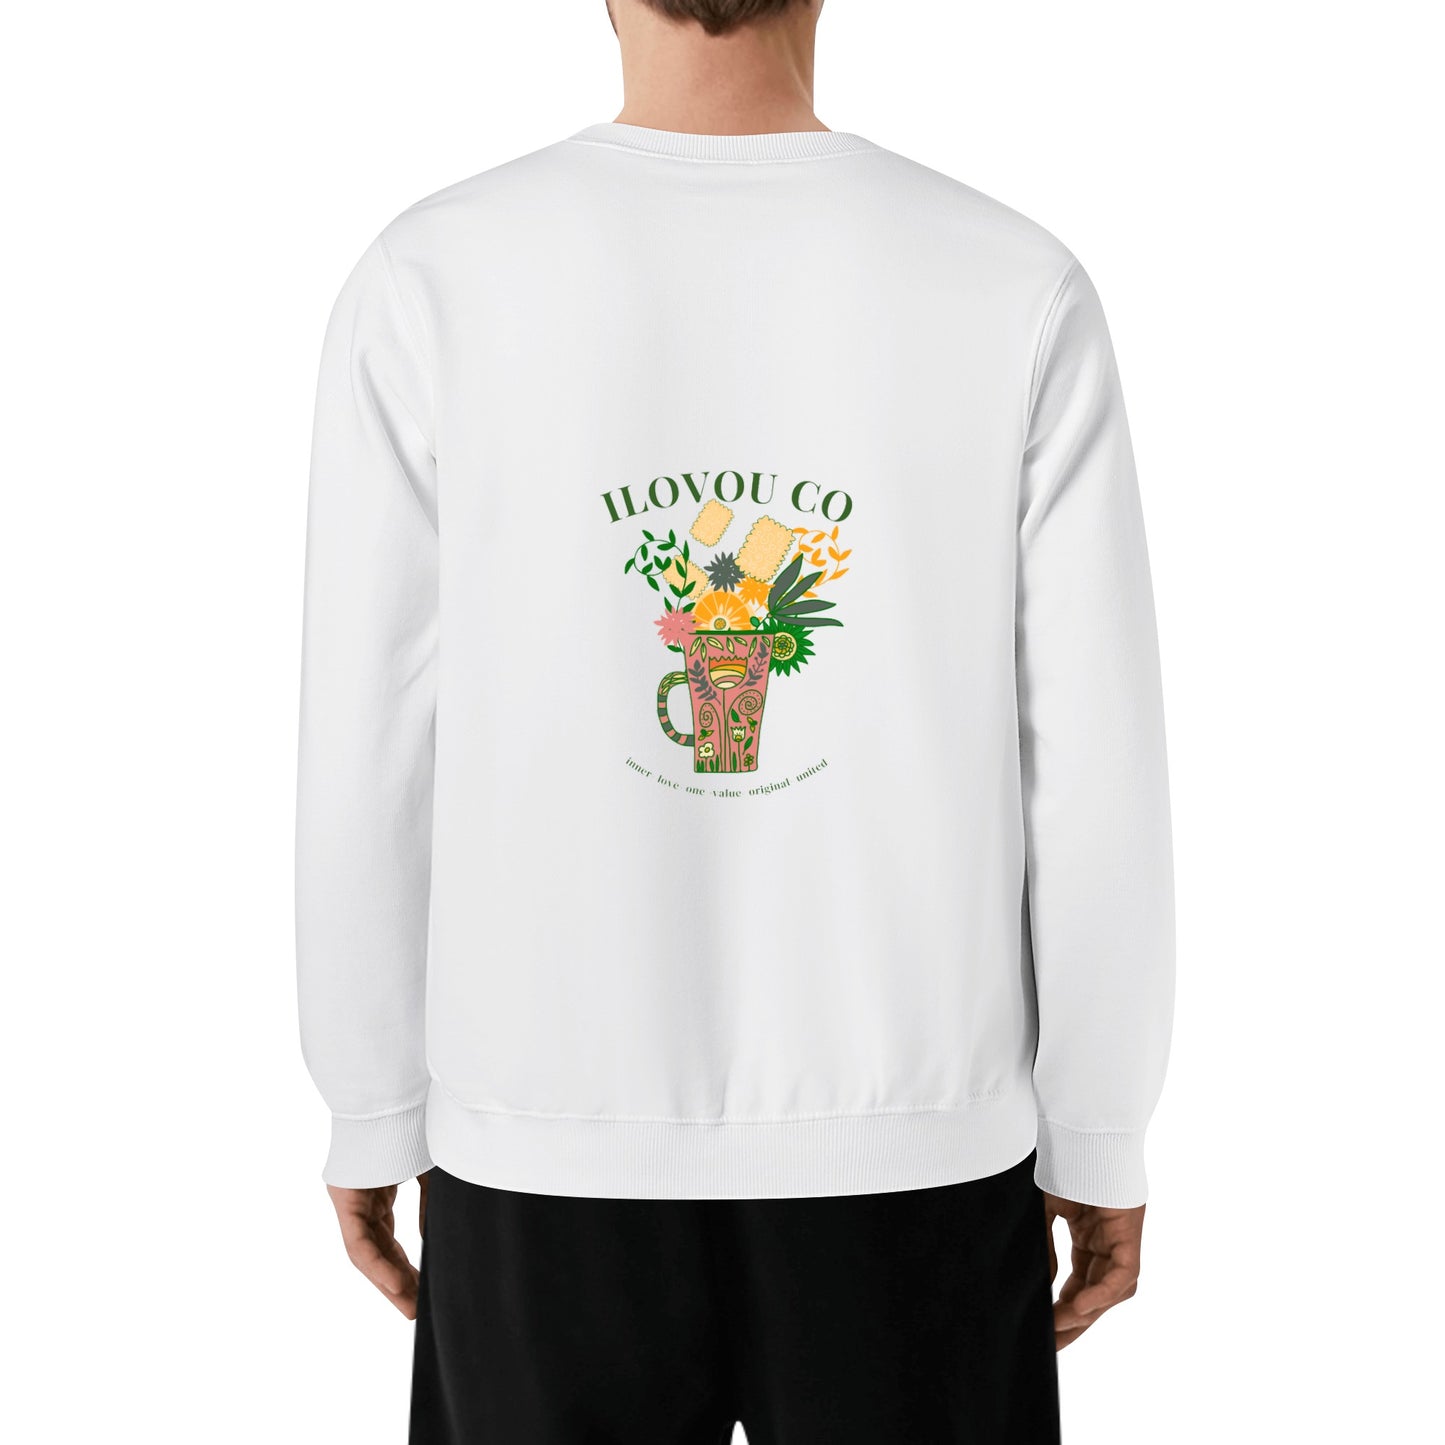 Ilovou Co Unisex Cotton Sweatshirt